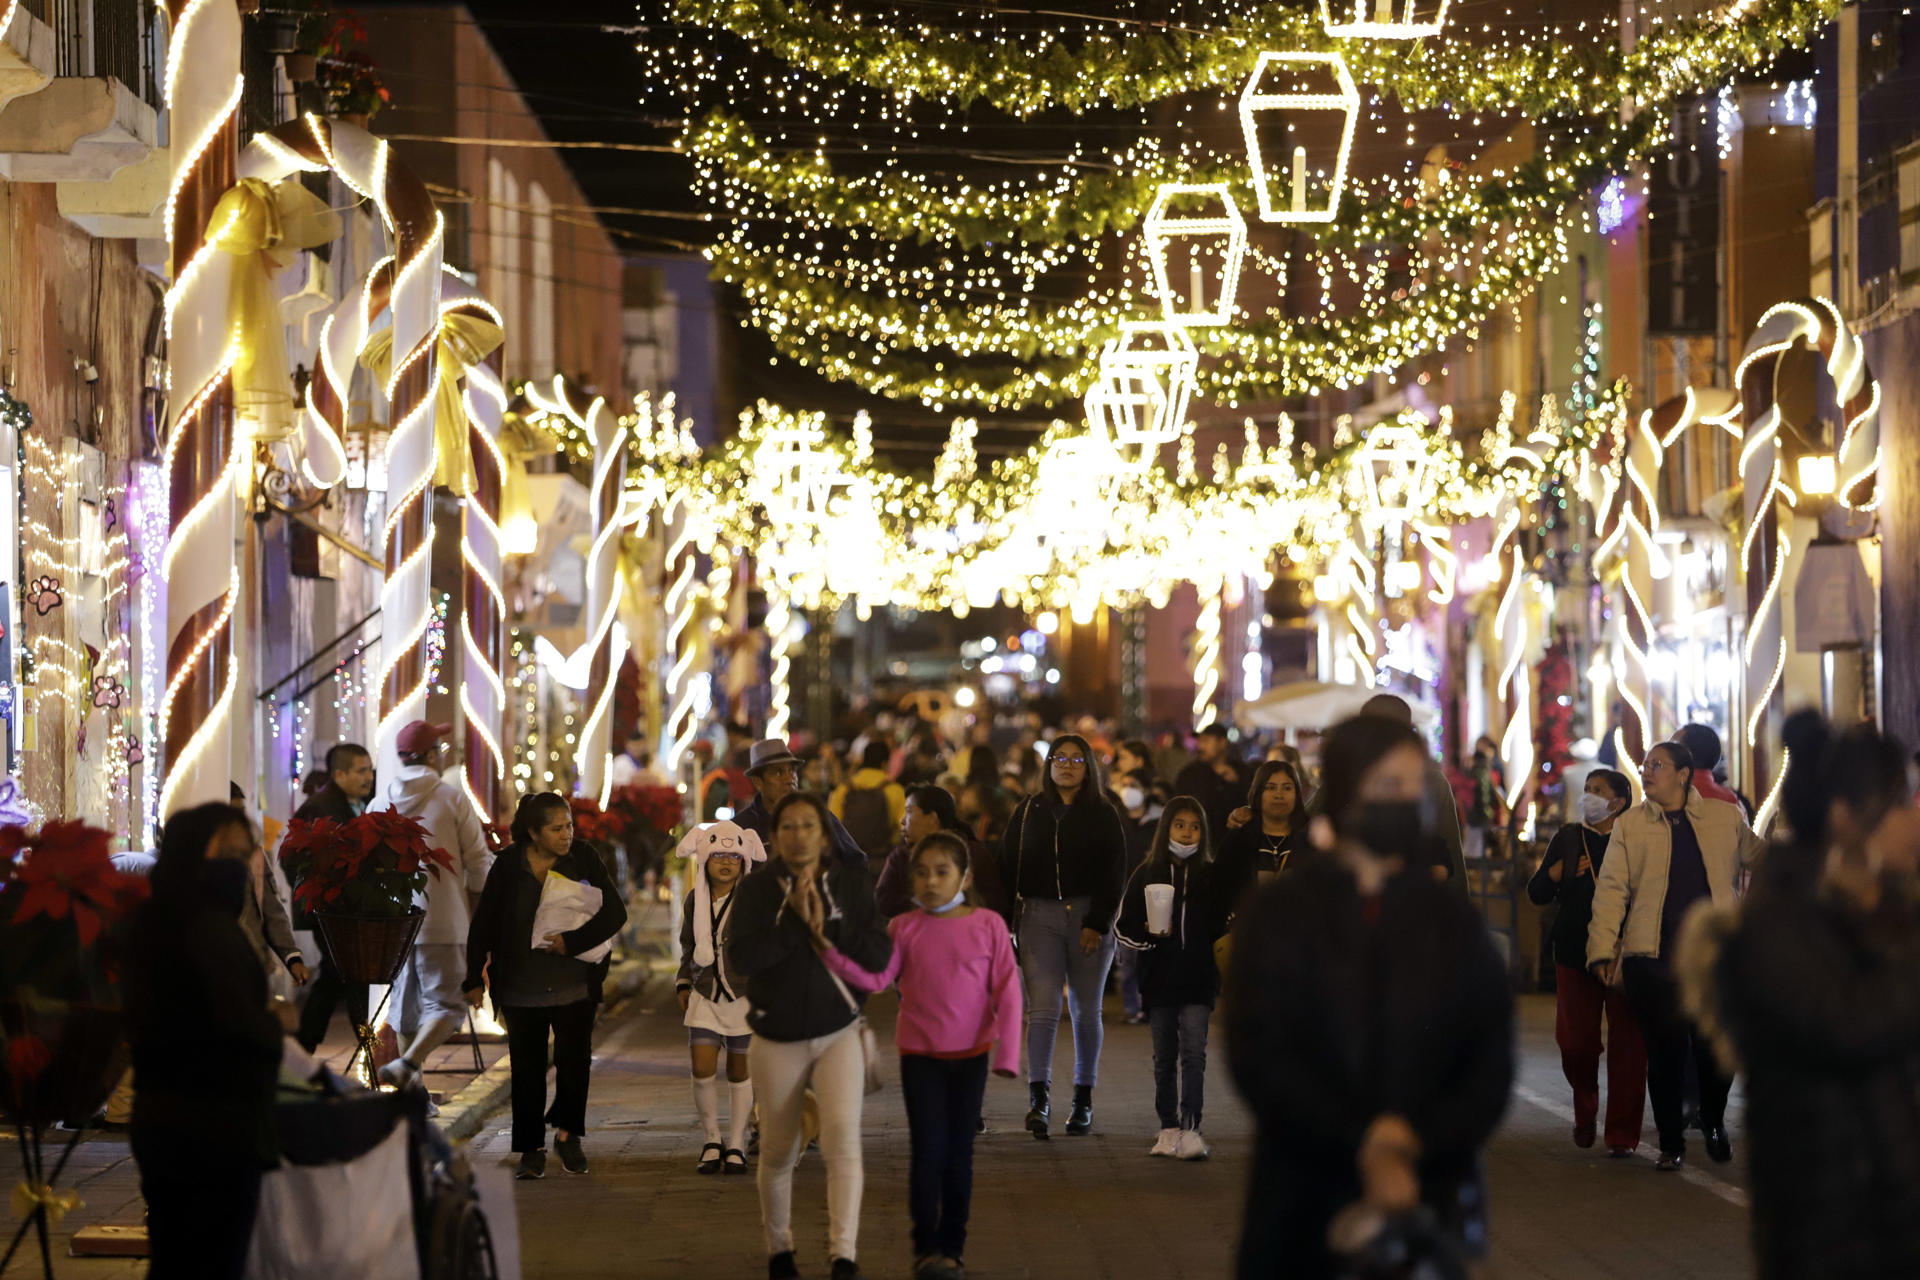 El centro de México se ilumina durante la temporada navideña